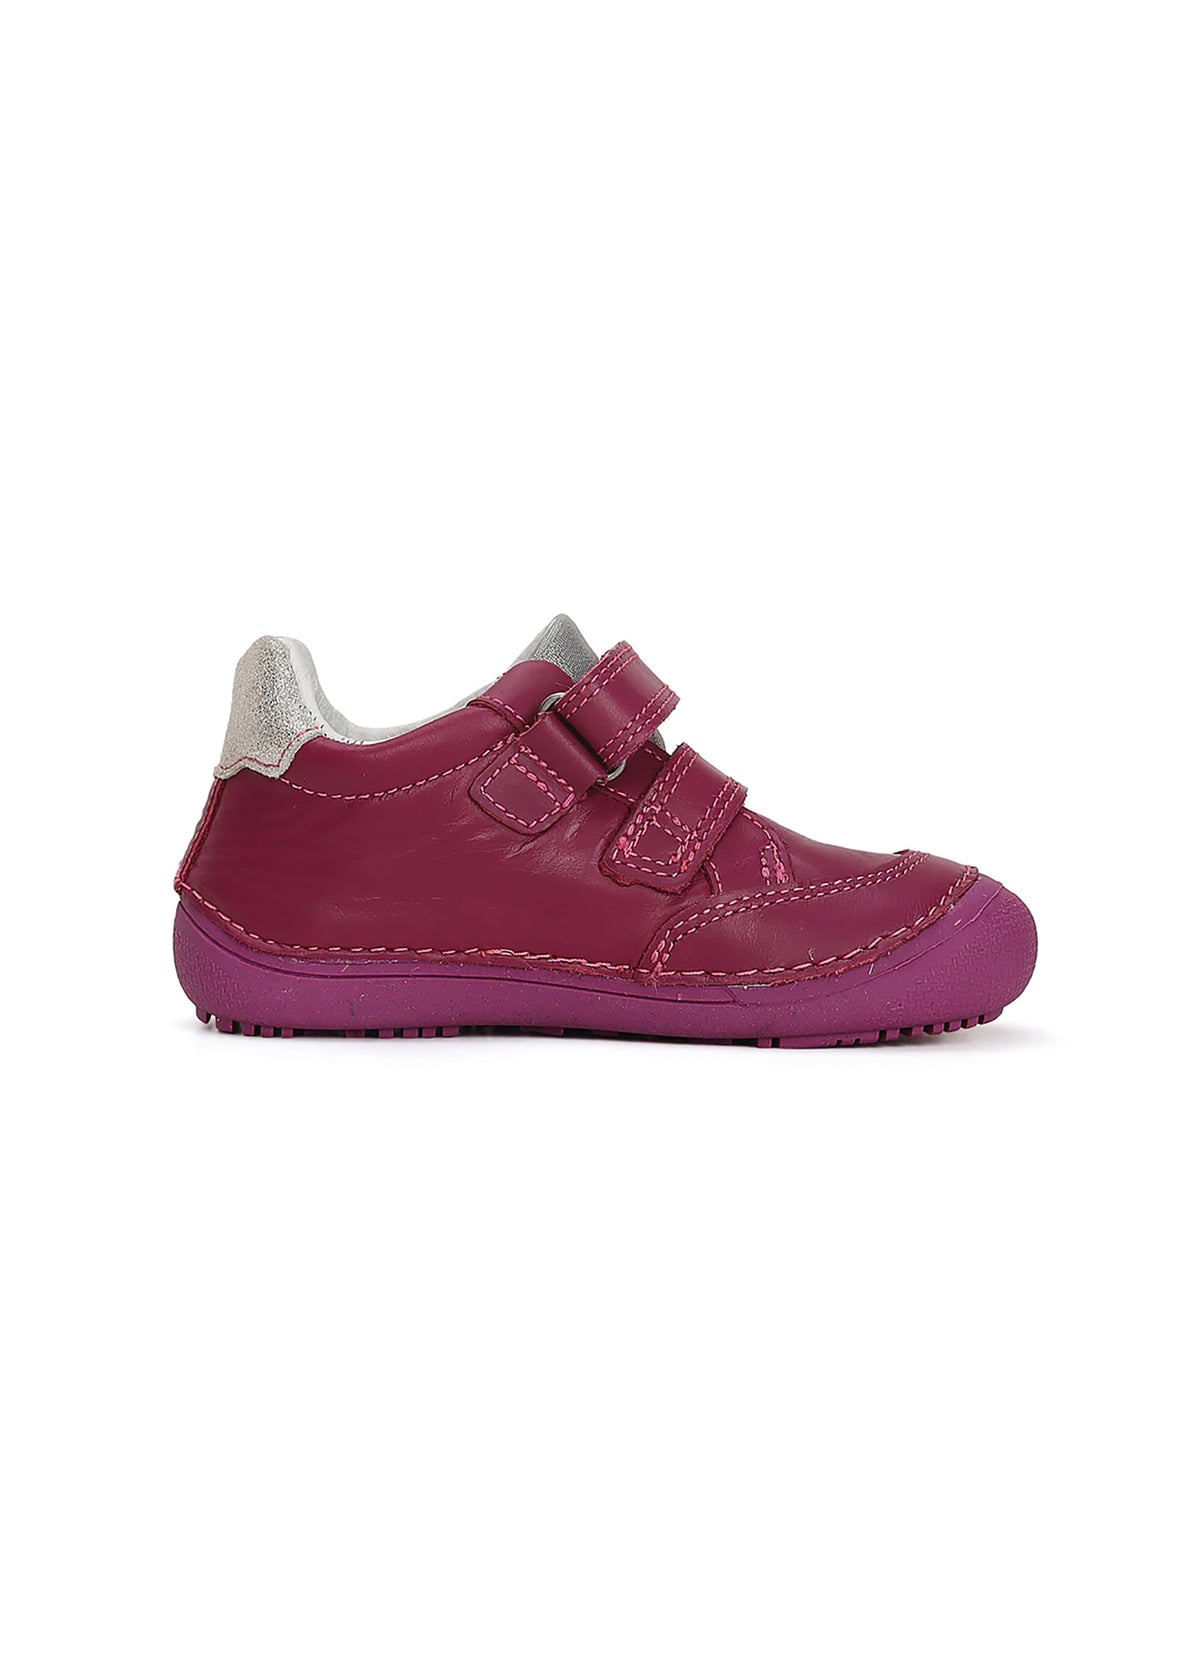 Children's barefoot sneakers - dark pink leather